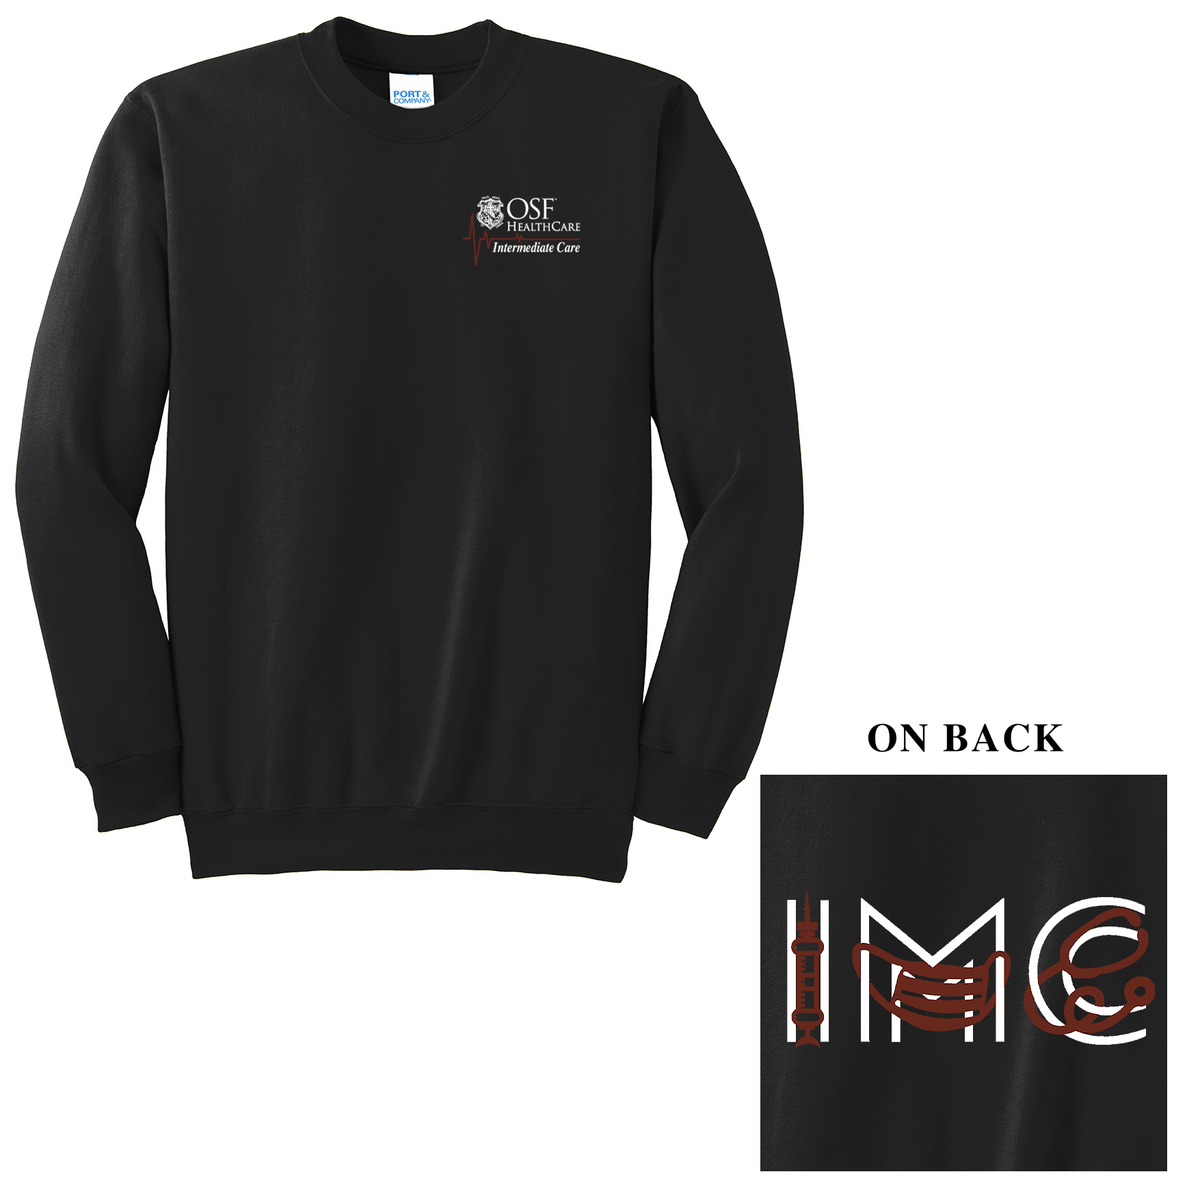 OSF Healthcare IMCU Crew Neck Sweater